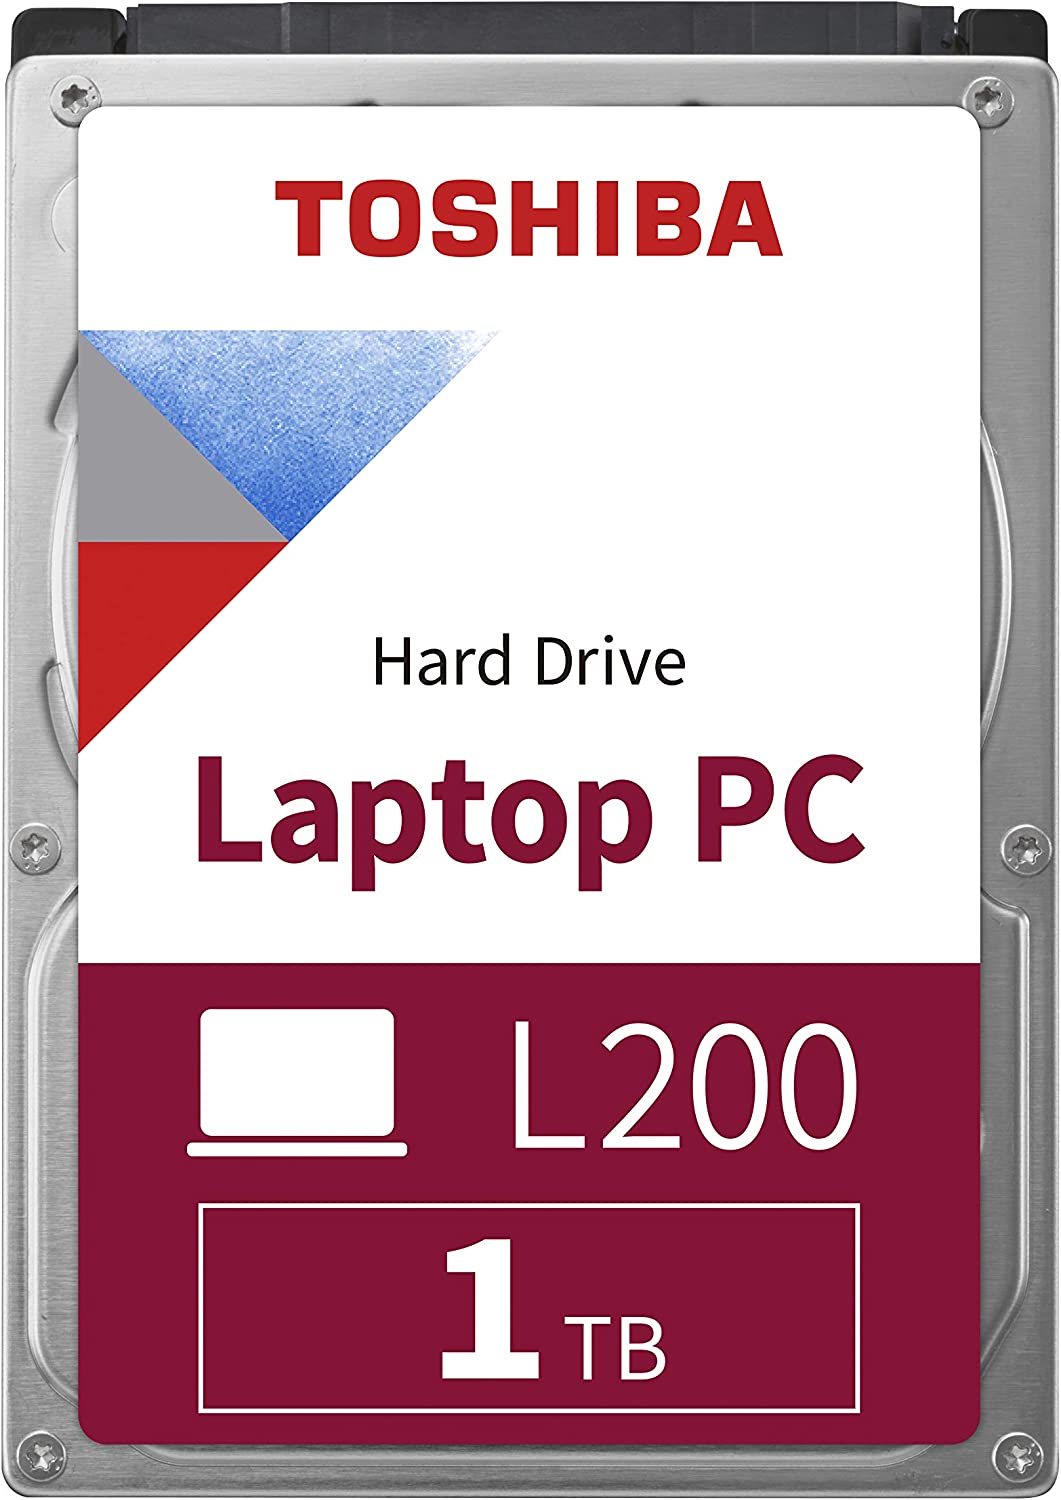 TOSHIBA L200 1TB 2.5&#8221; INTERNAL NOTEBOOK LAPTOP HARD DRIVE-HDWL110UZSVA